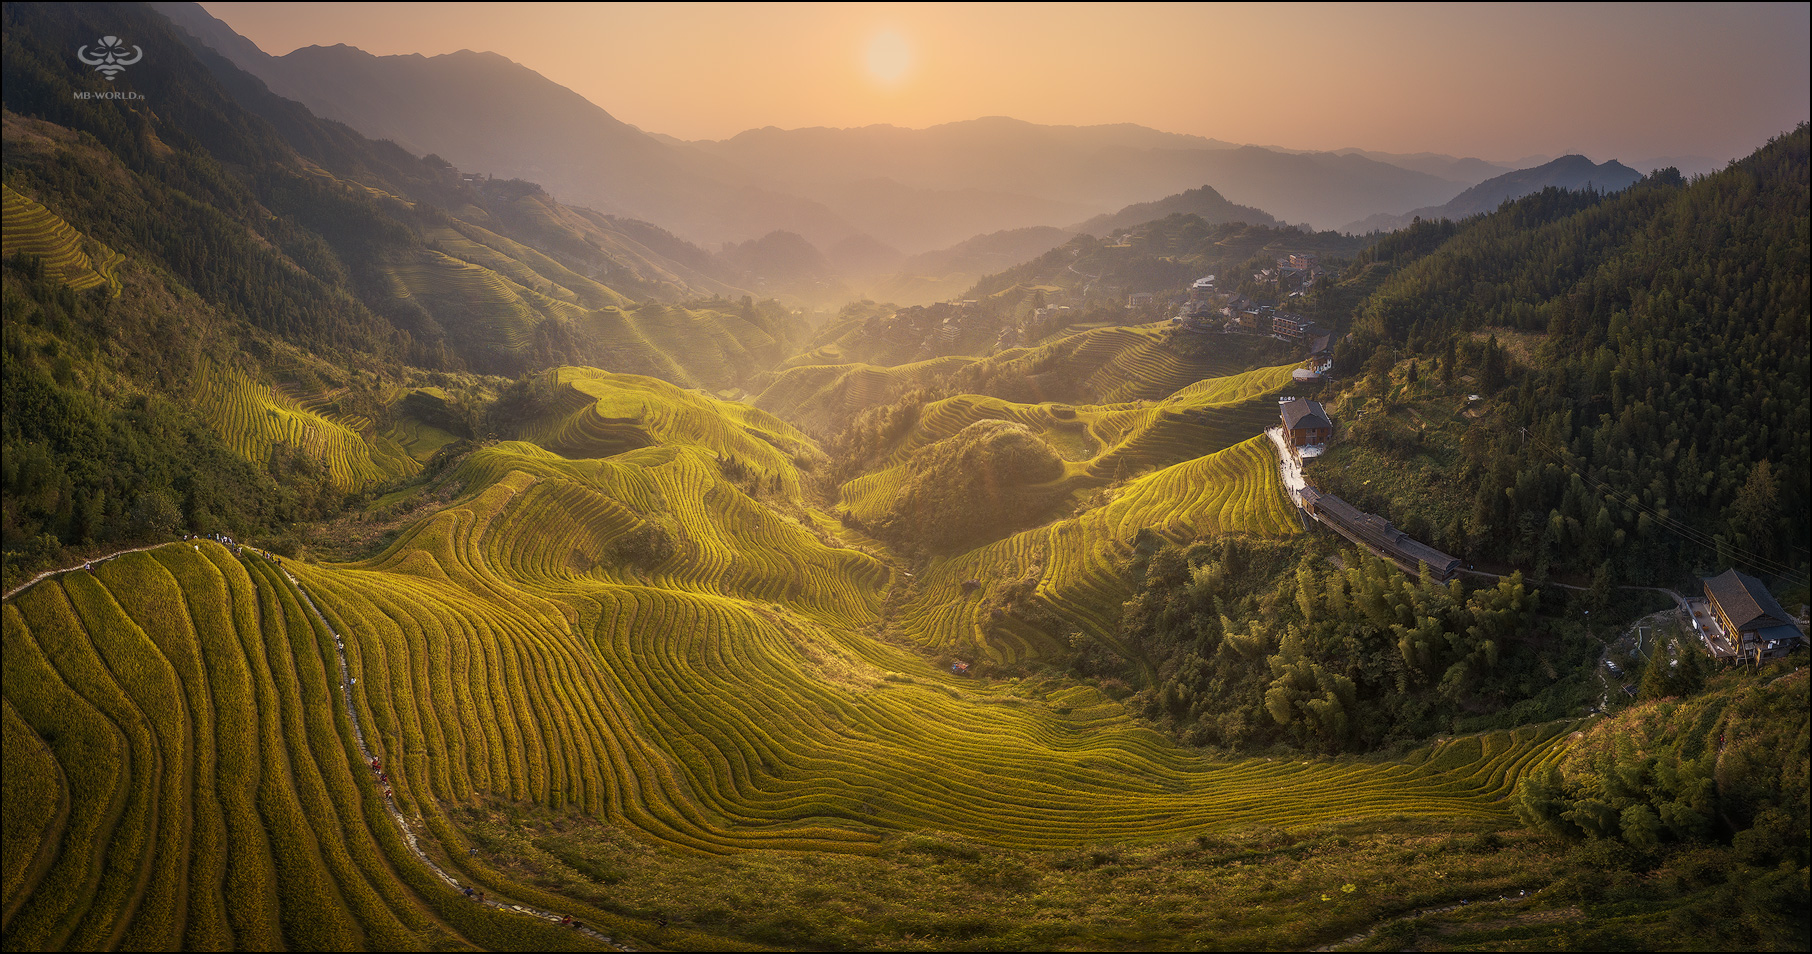 Rice terraces, China